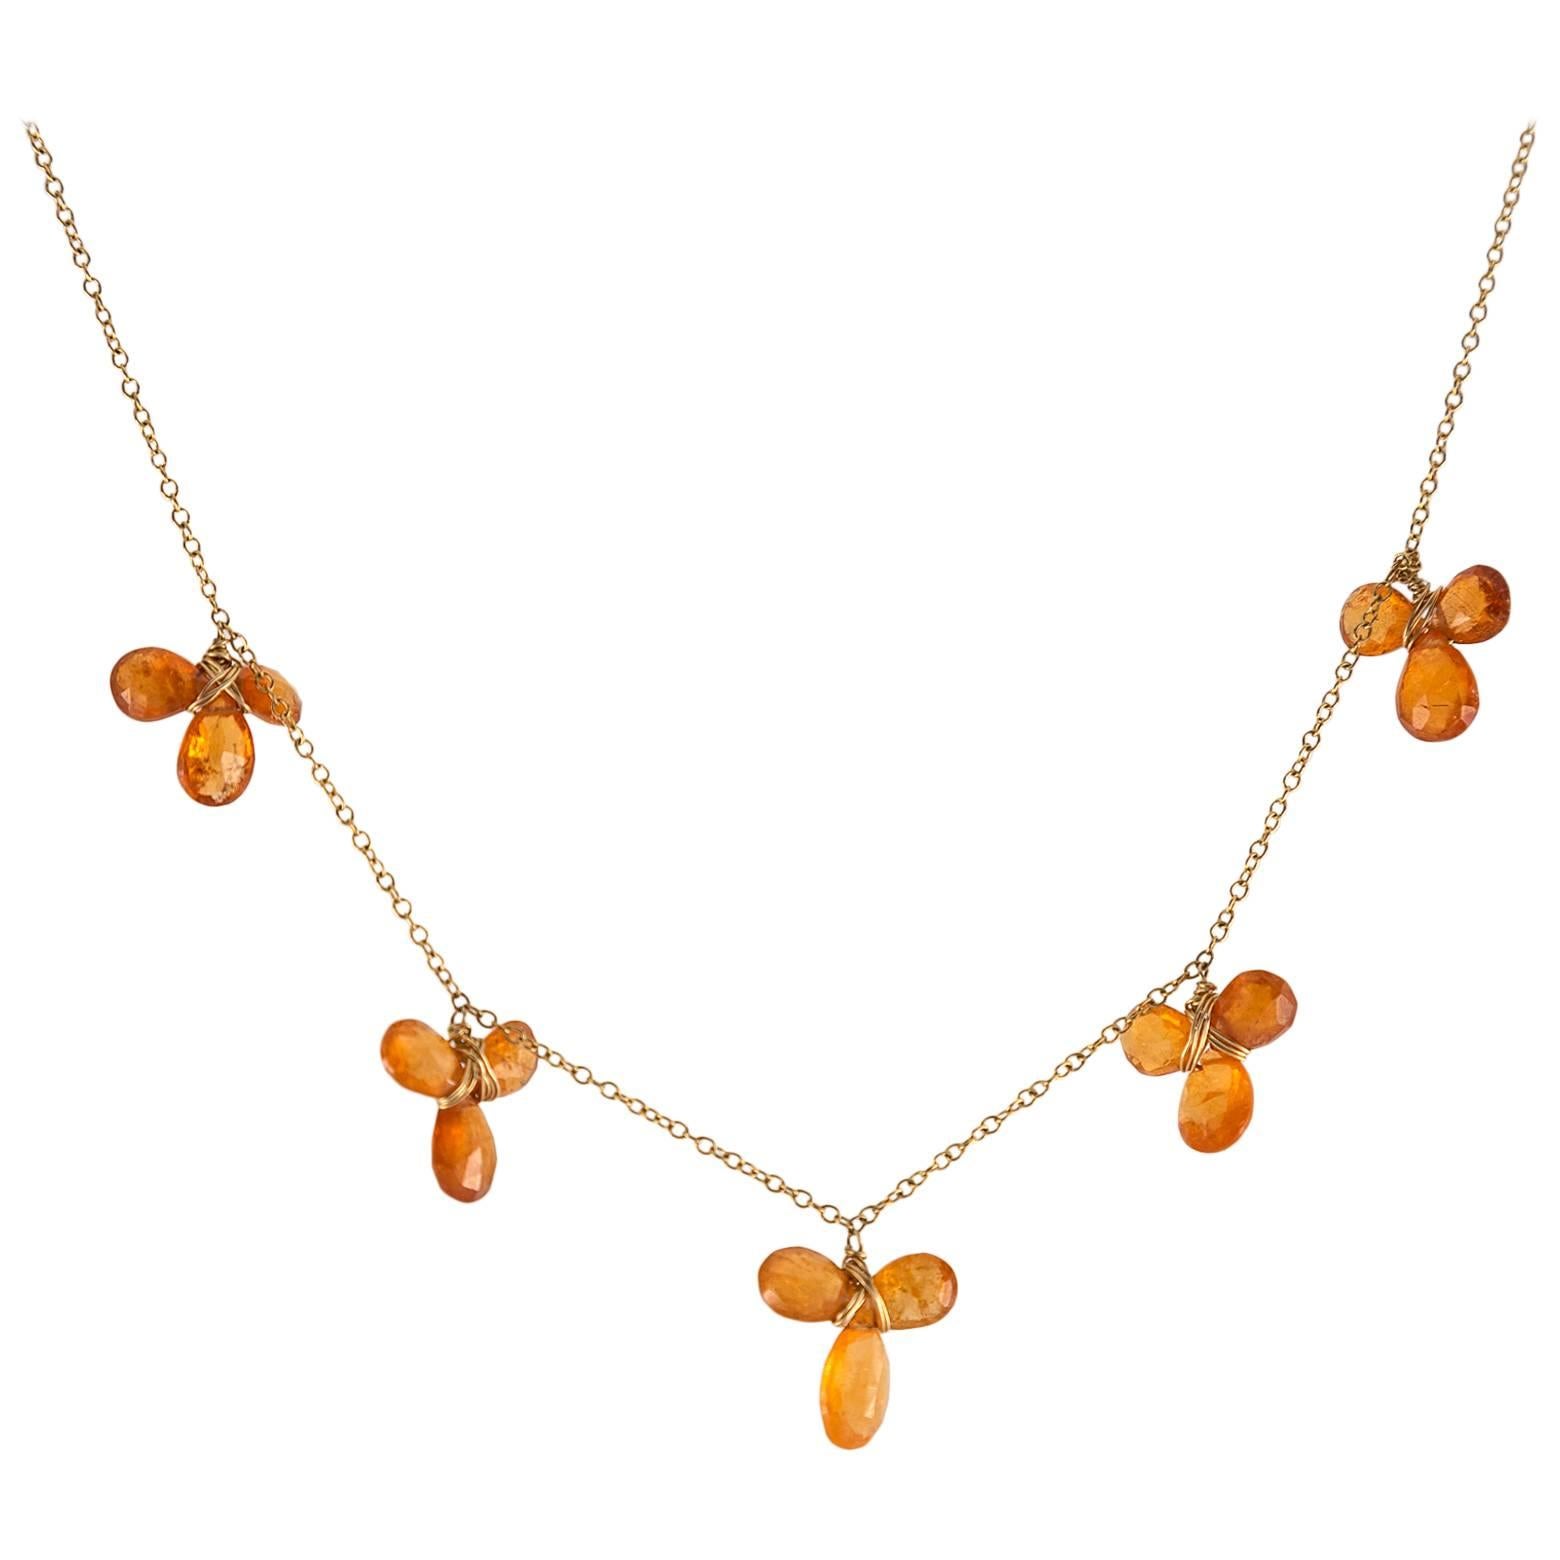 Hessonite Garnet Briolette Necklace on a Gold Filled Chain